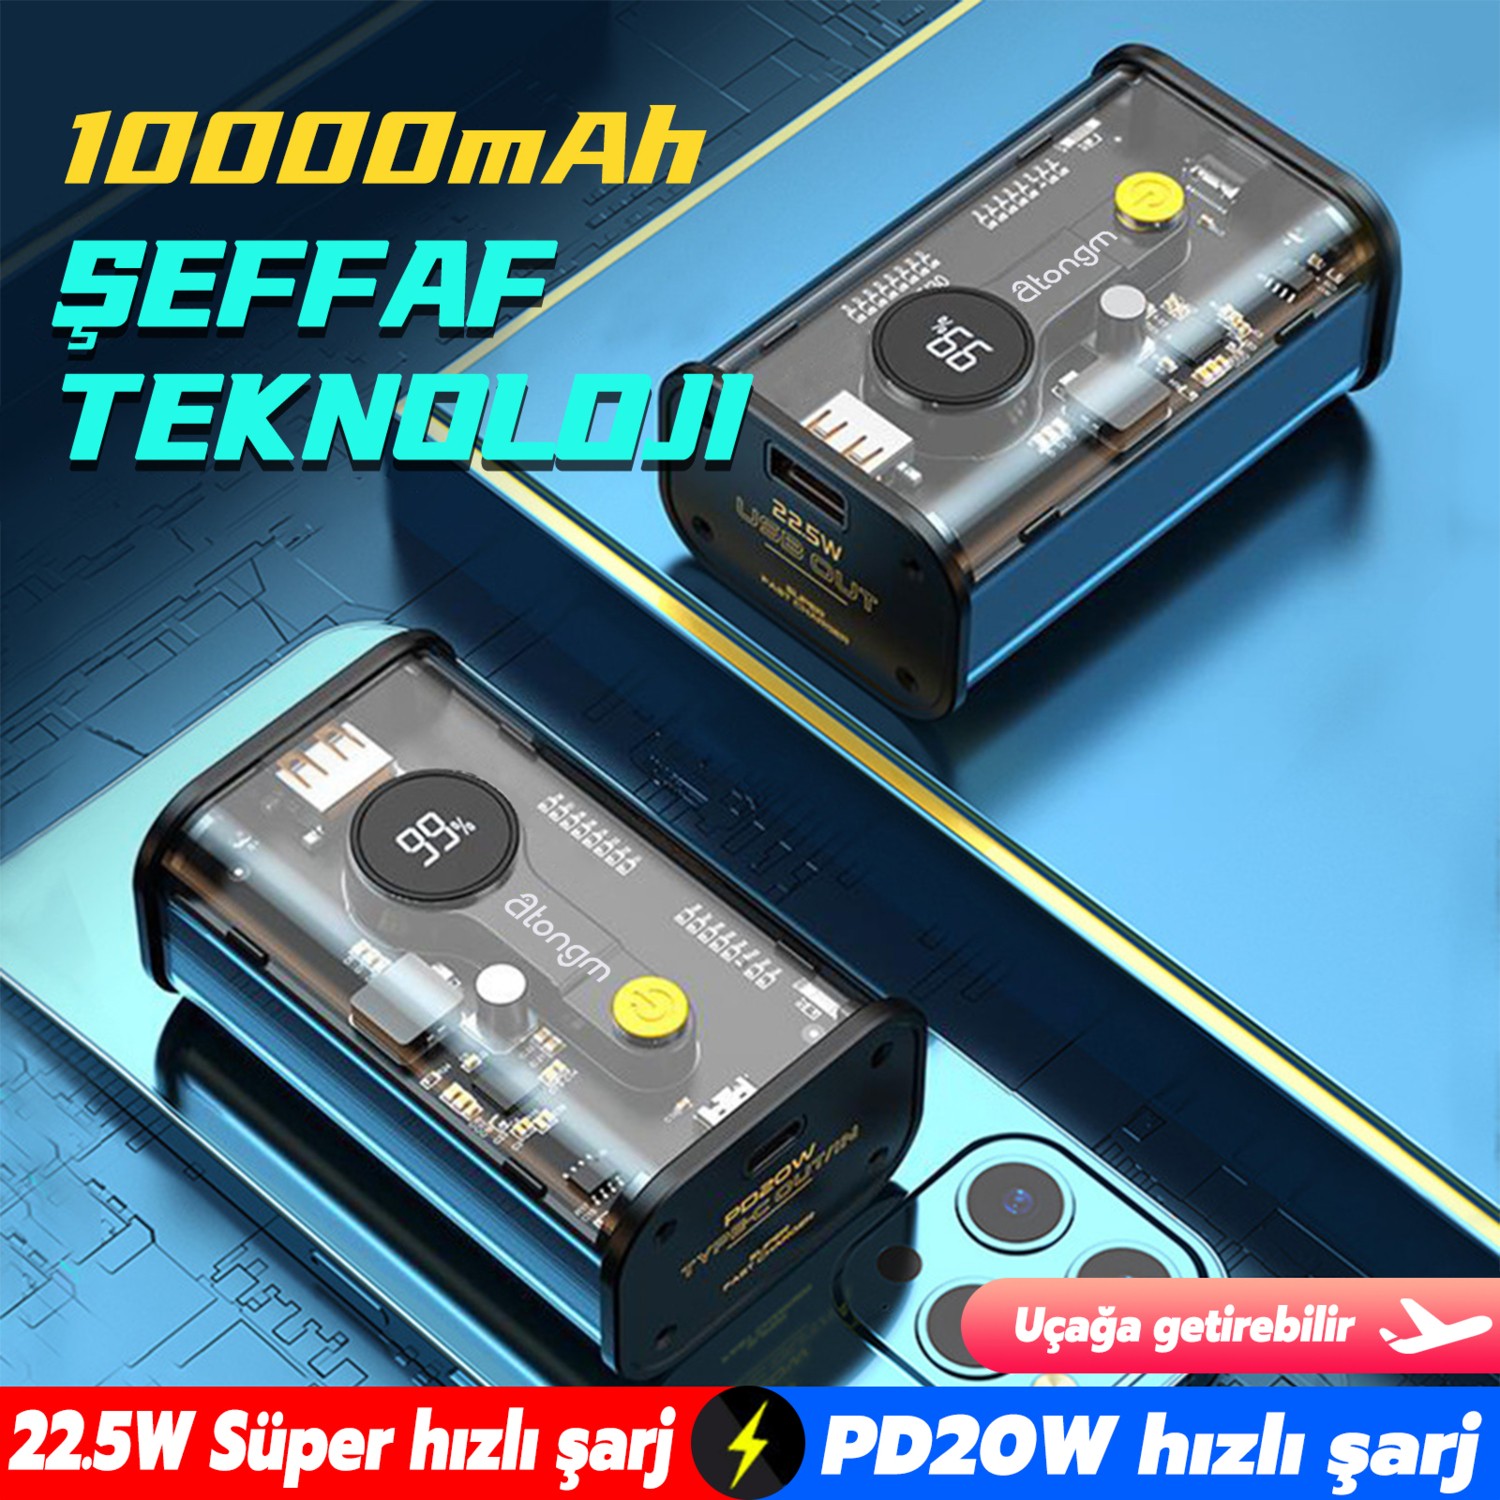 Atongm 22.5W/PD Hızlı Şarj 10000MAH Power Bank Şeffaf Fiyatı